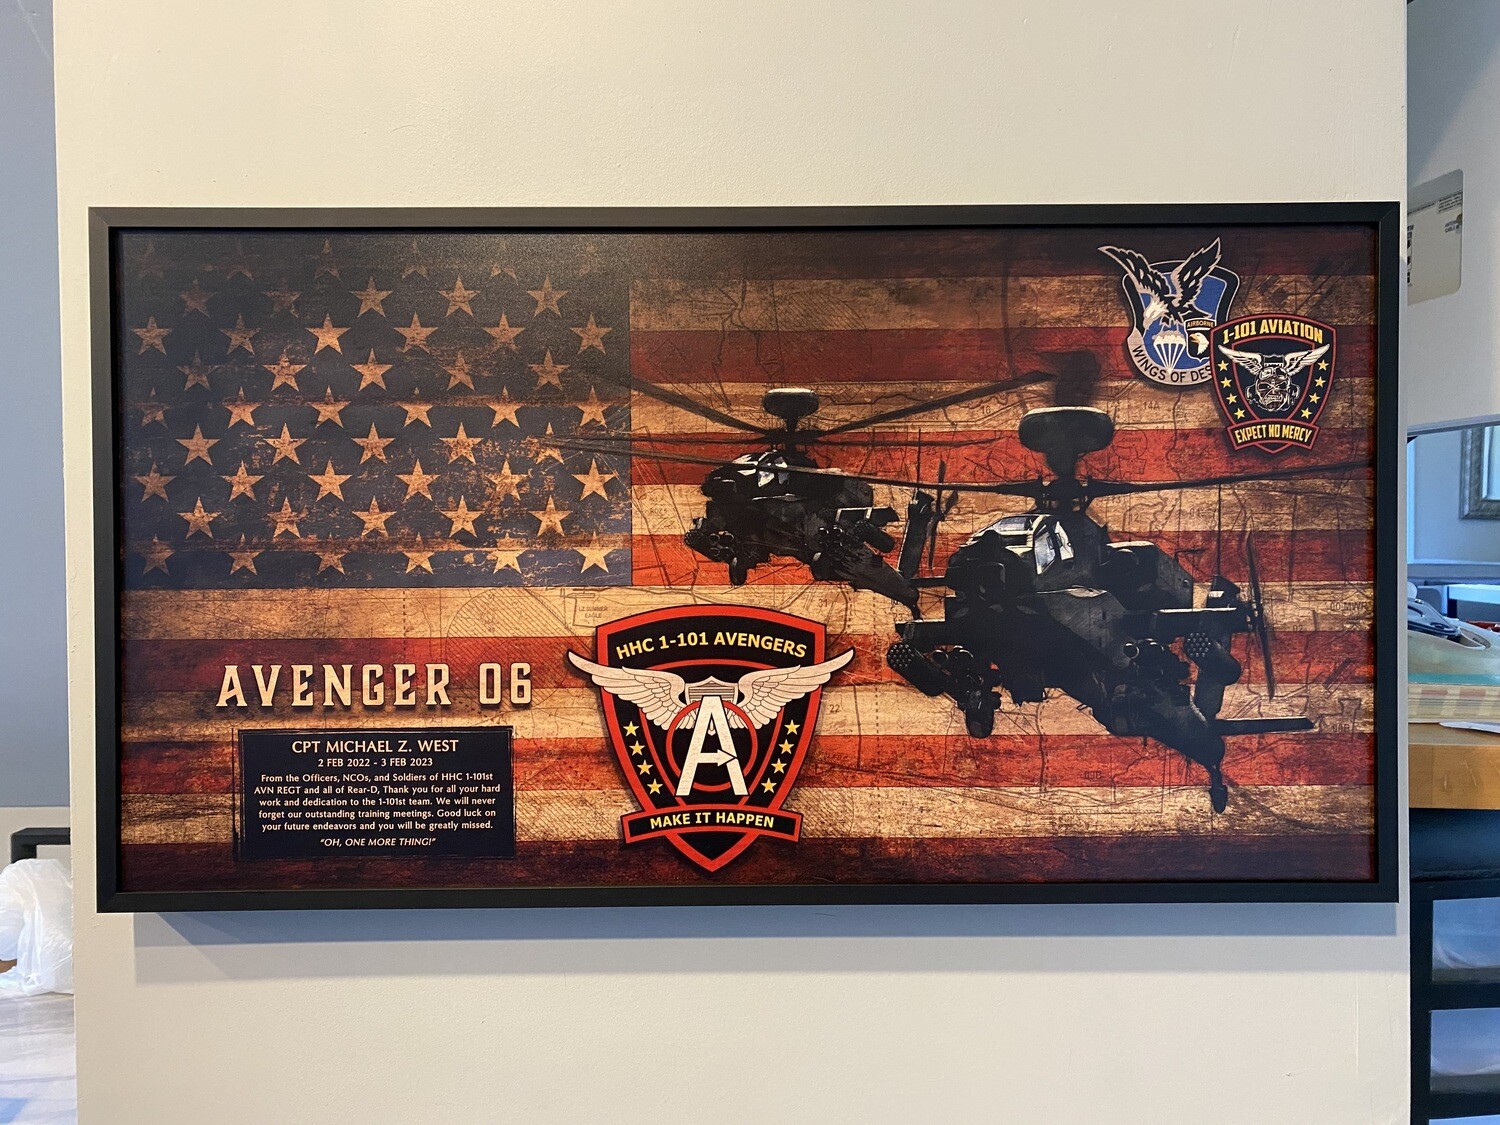 HHC "Avengers" 1-101 AVN REGT Rustic Flag Plaque - 28.25"x15.25"